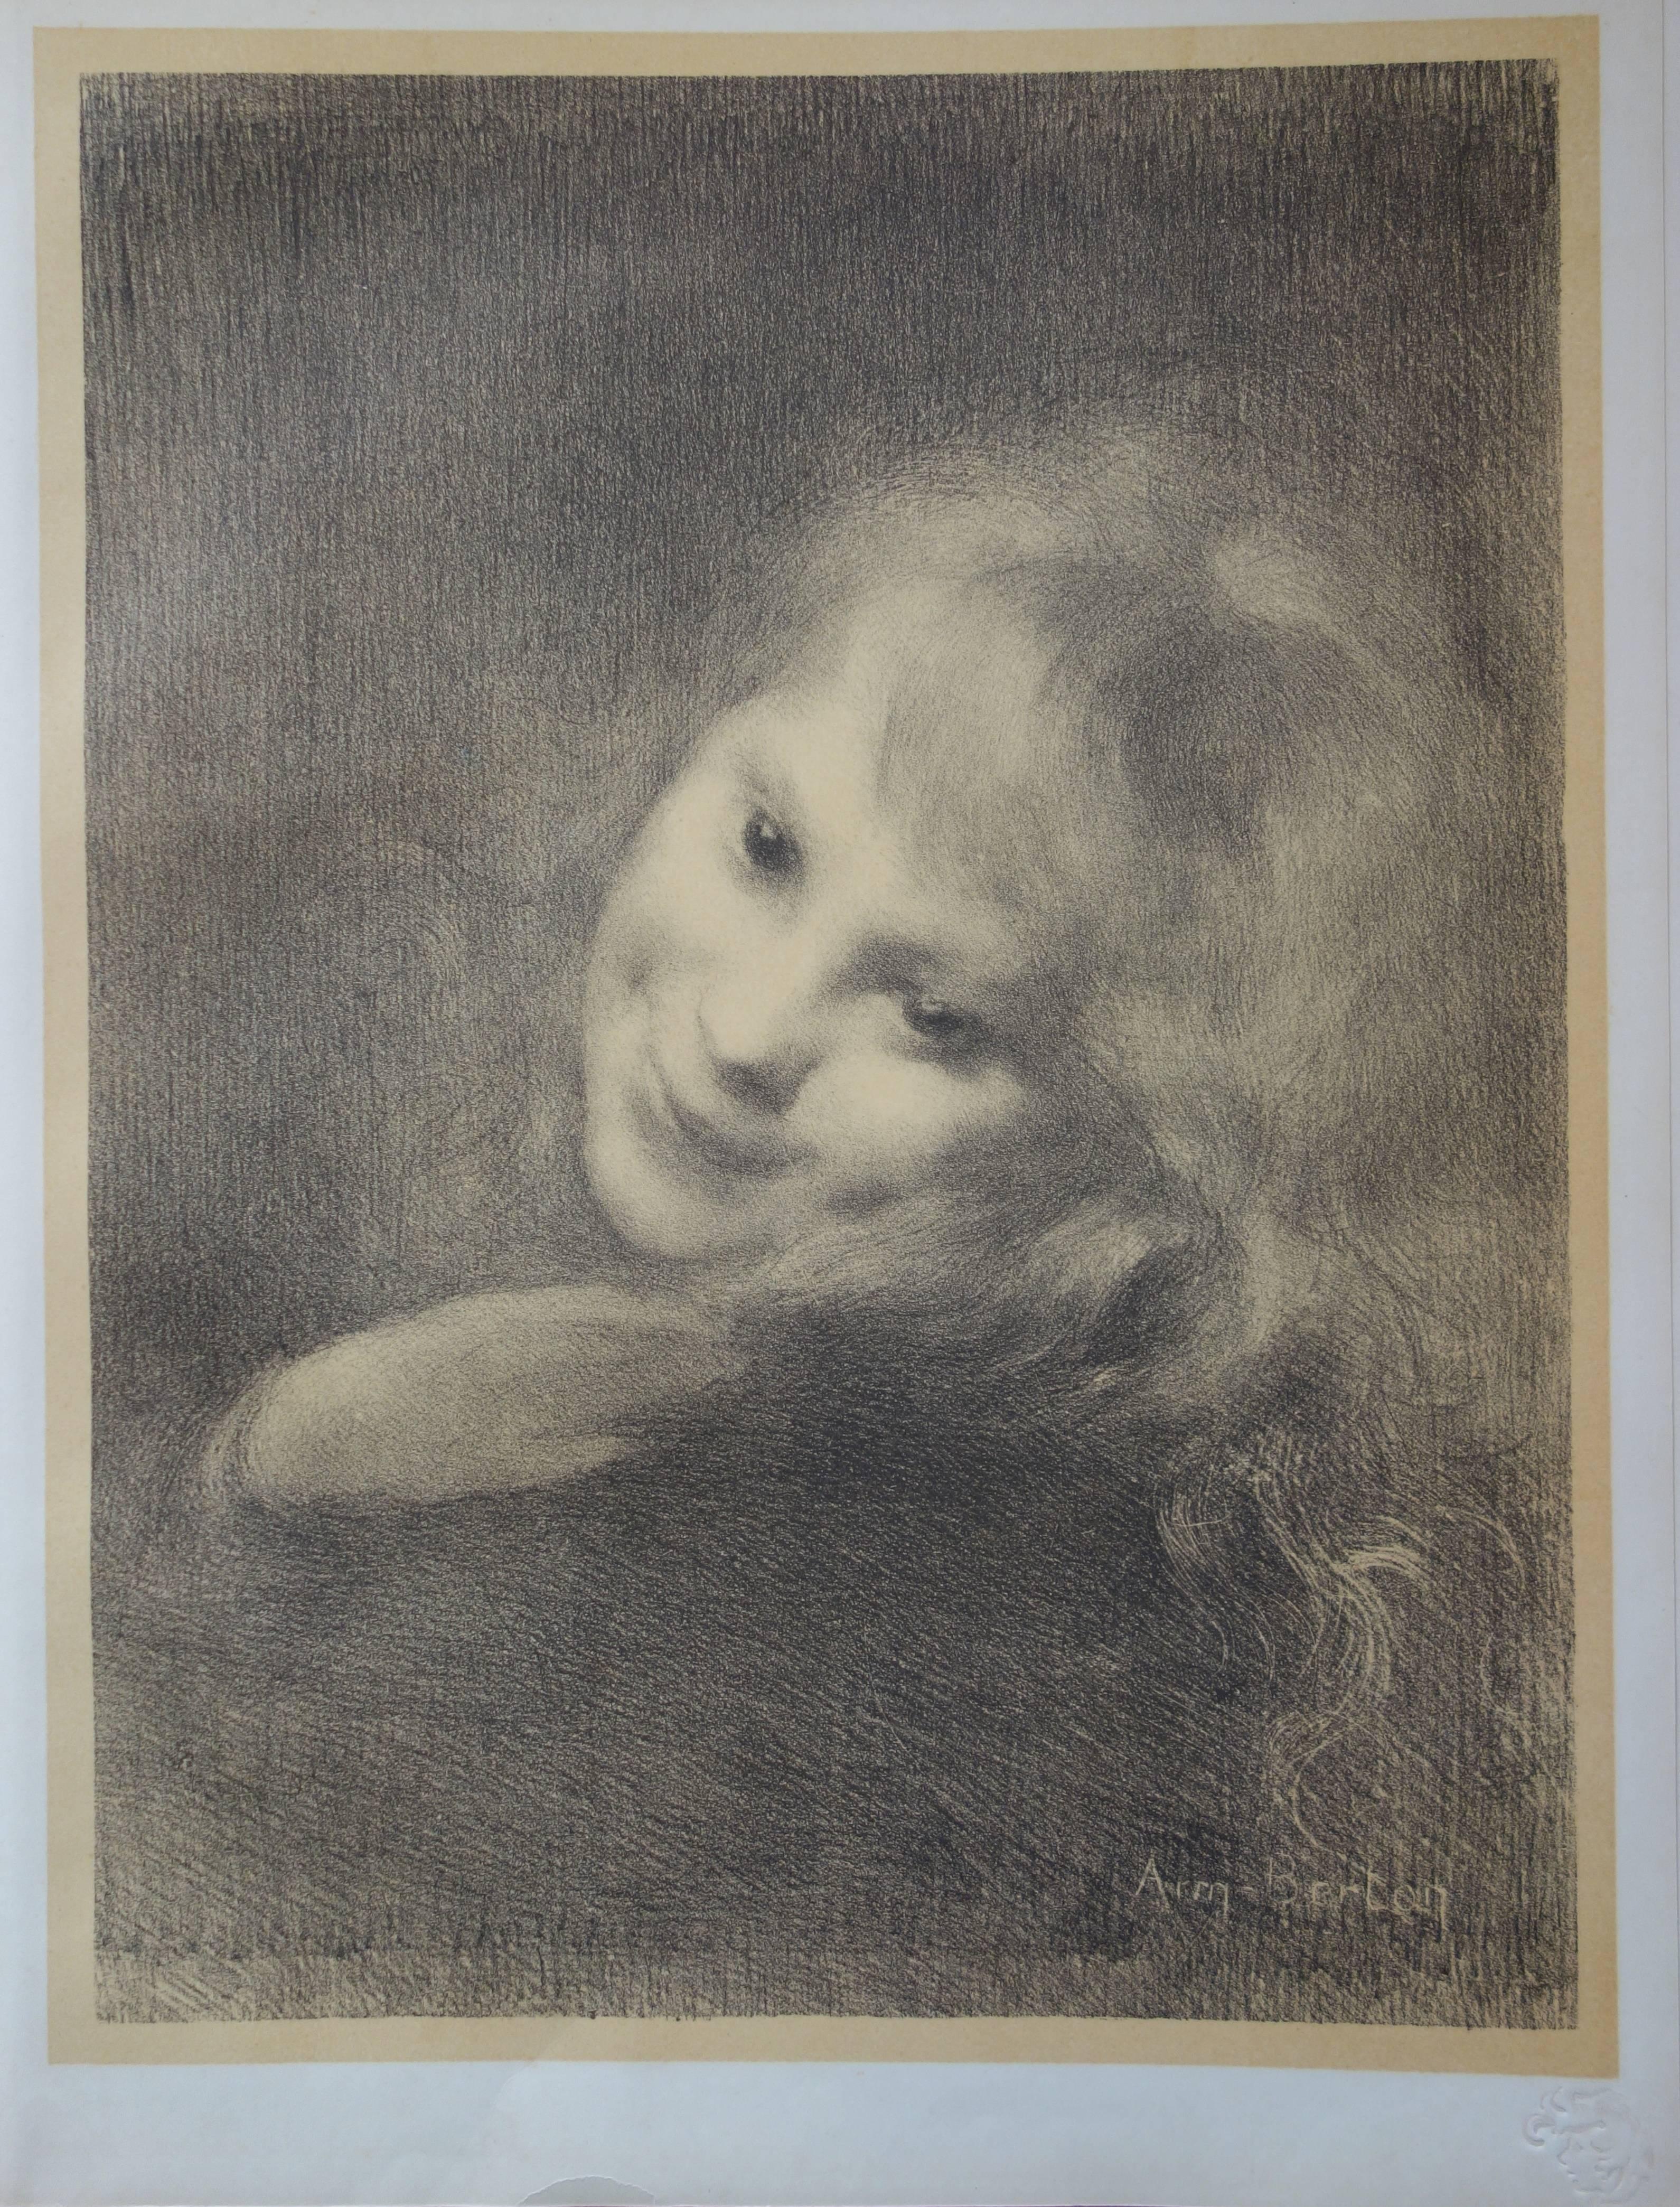 Armand Berton Figurative Print - Laughing Girl - original lithograph (1897-1898)